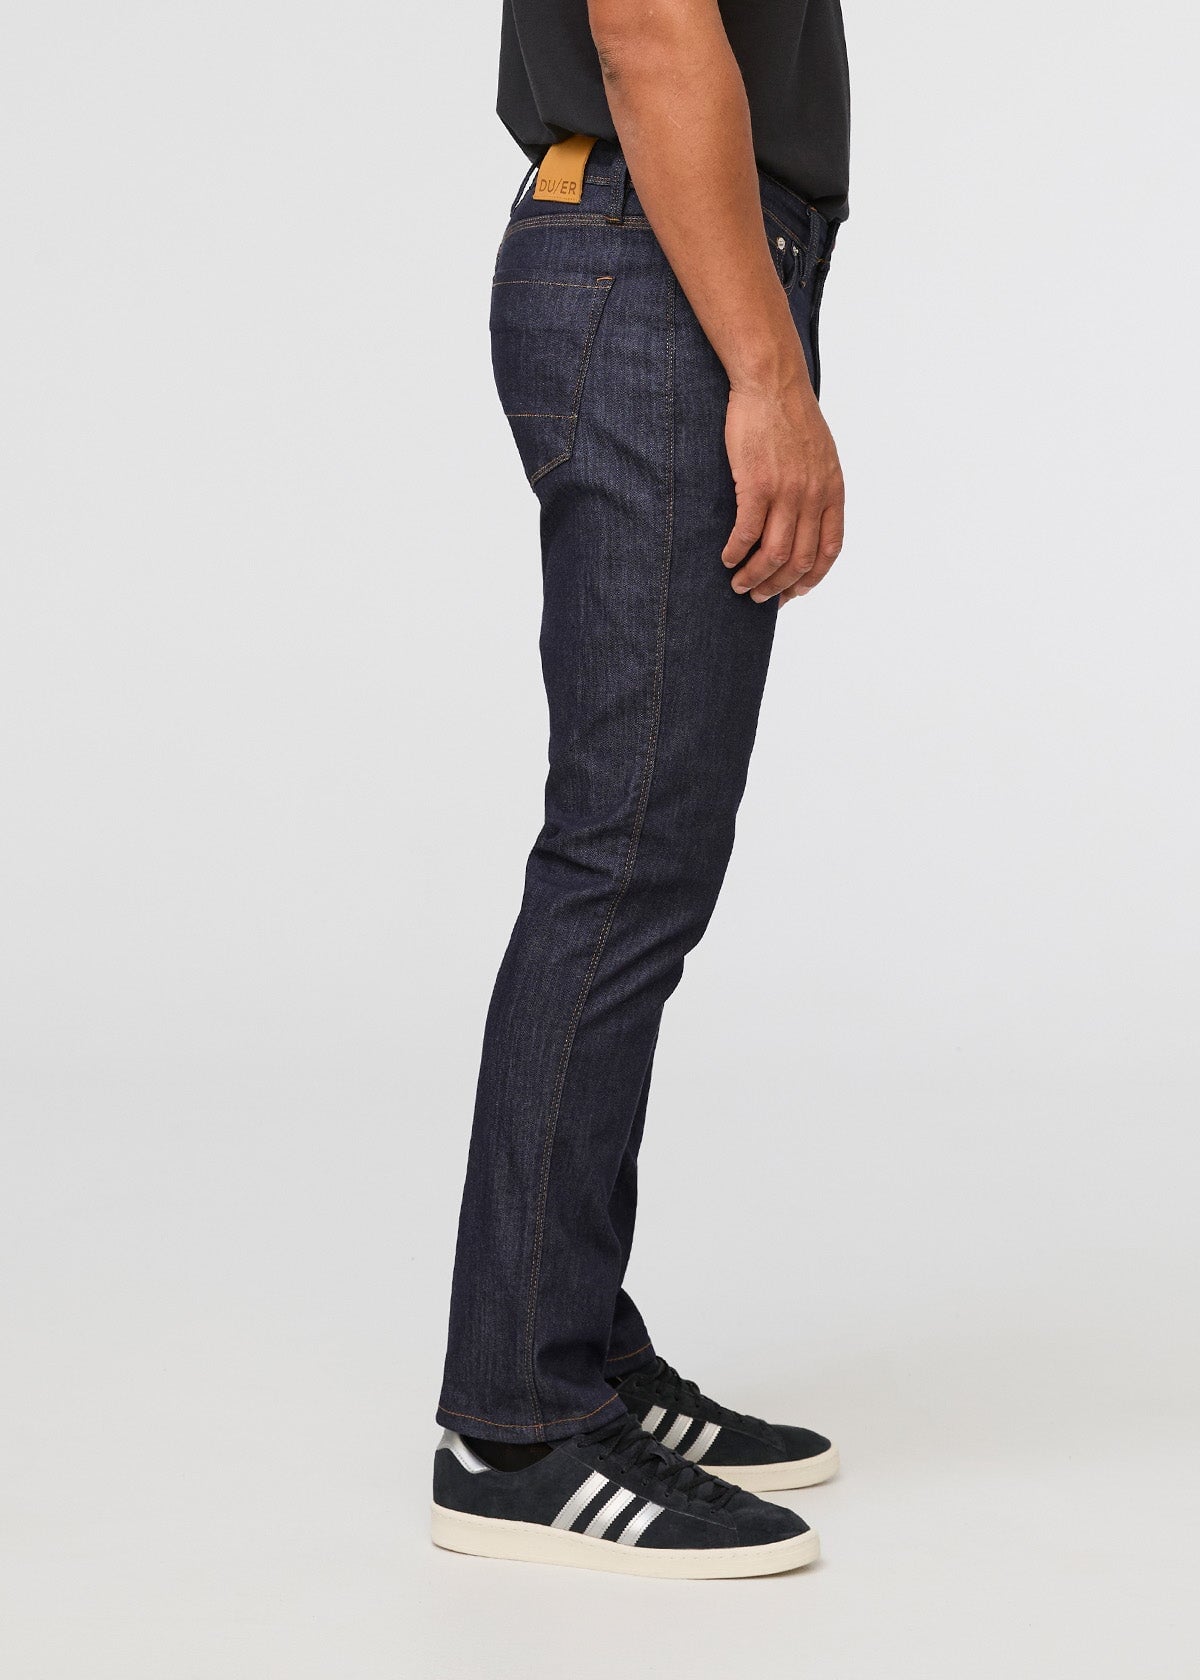 GAP Men's Soft Wear Stretch Slim Fit Denim Jeans, Medium Indigo